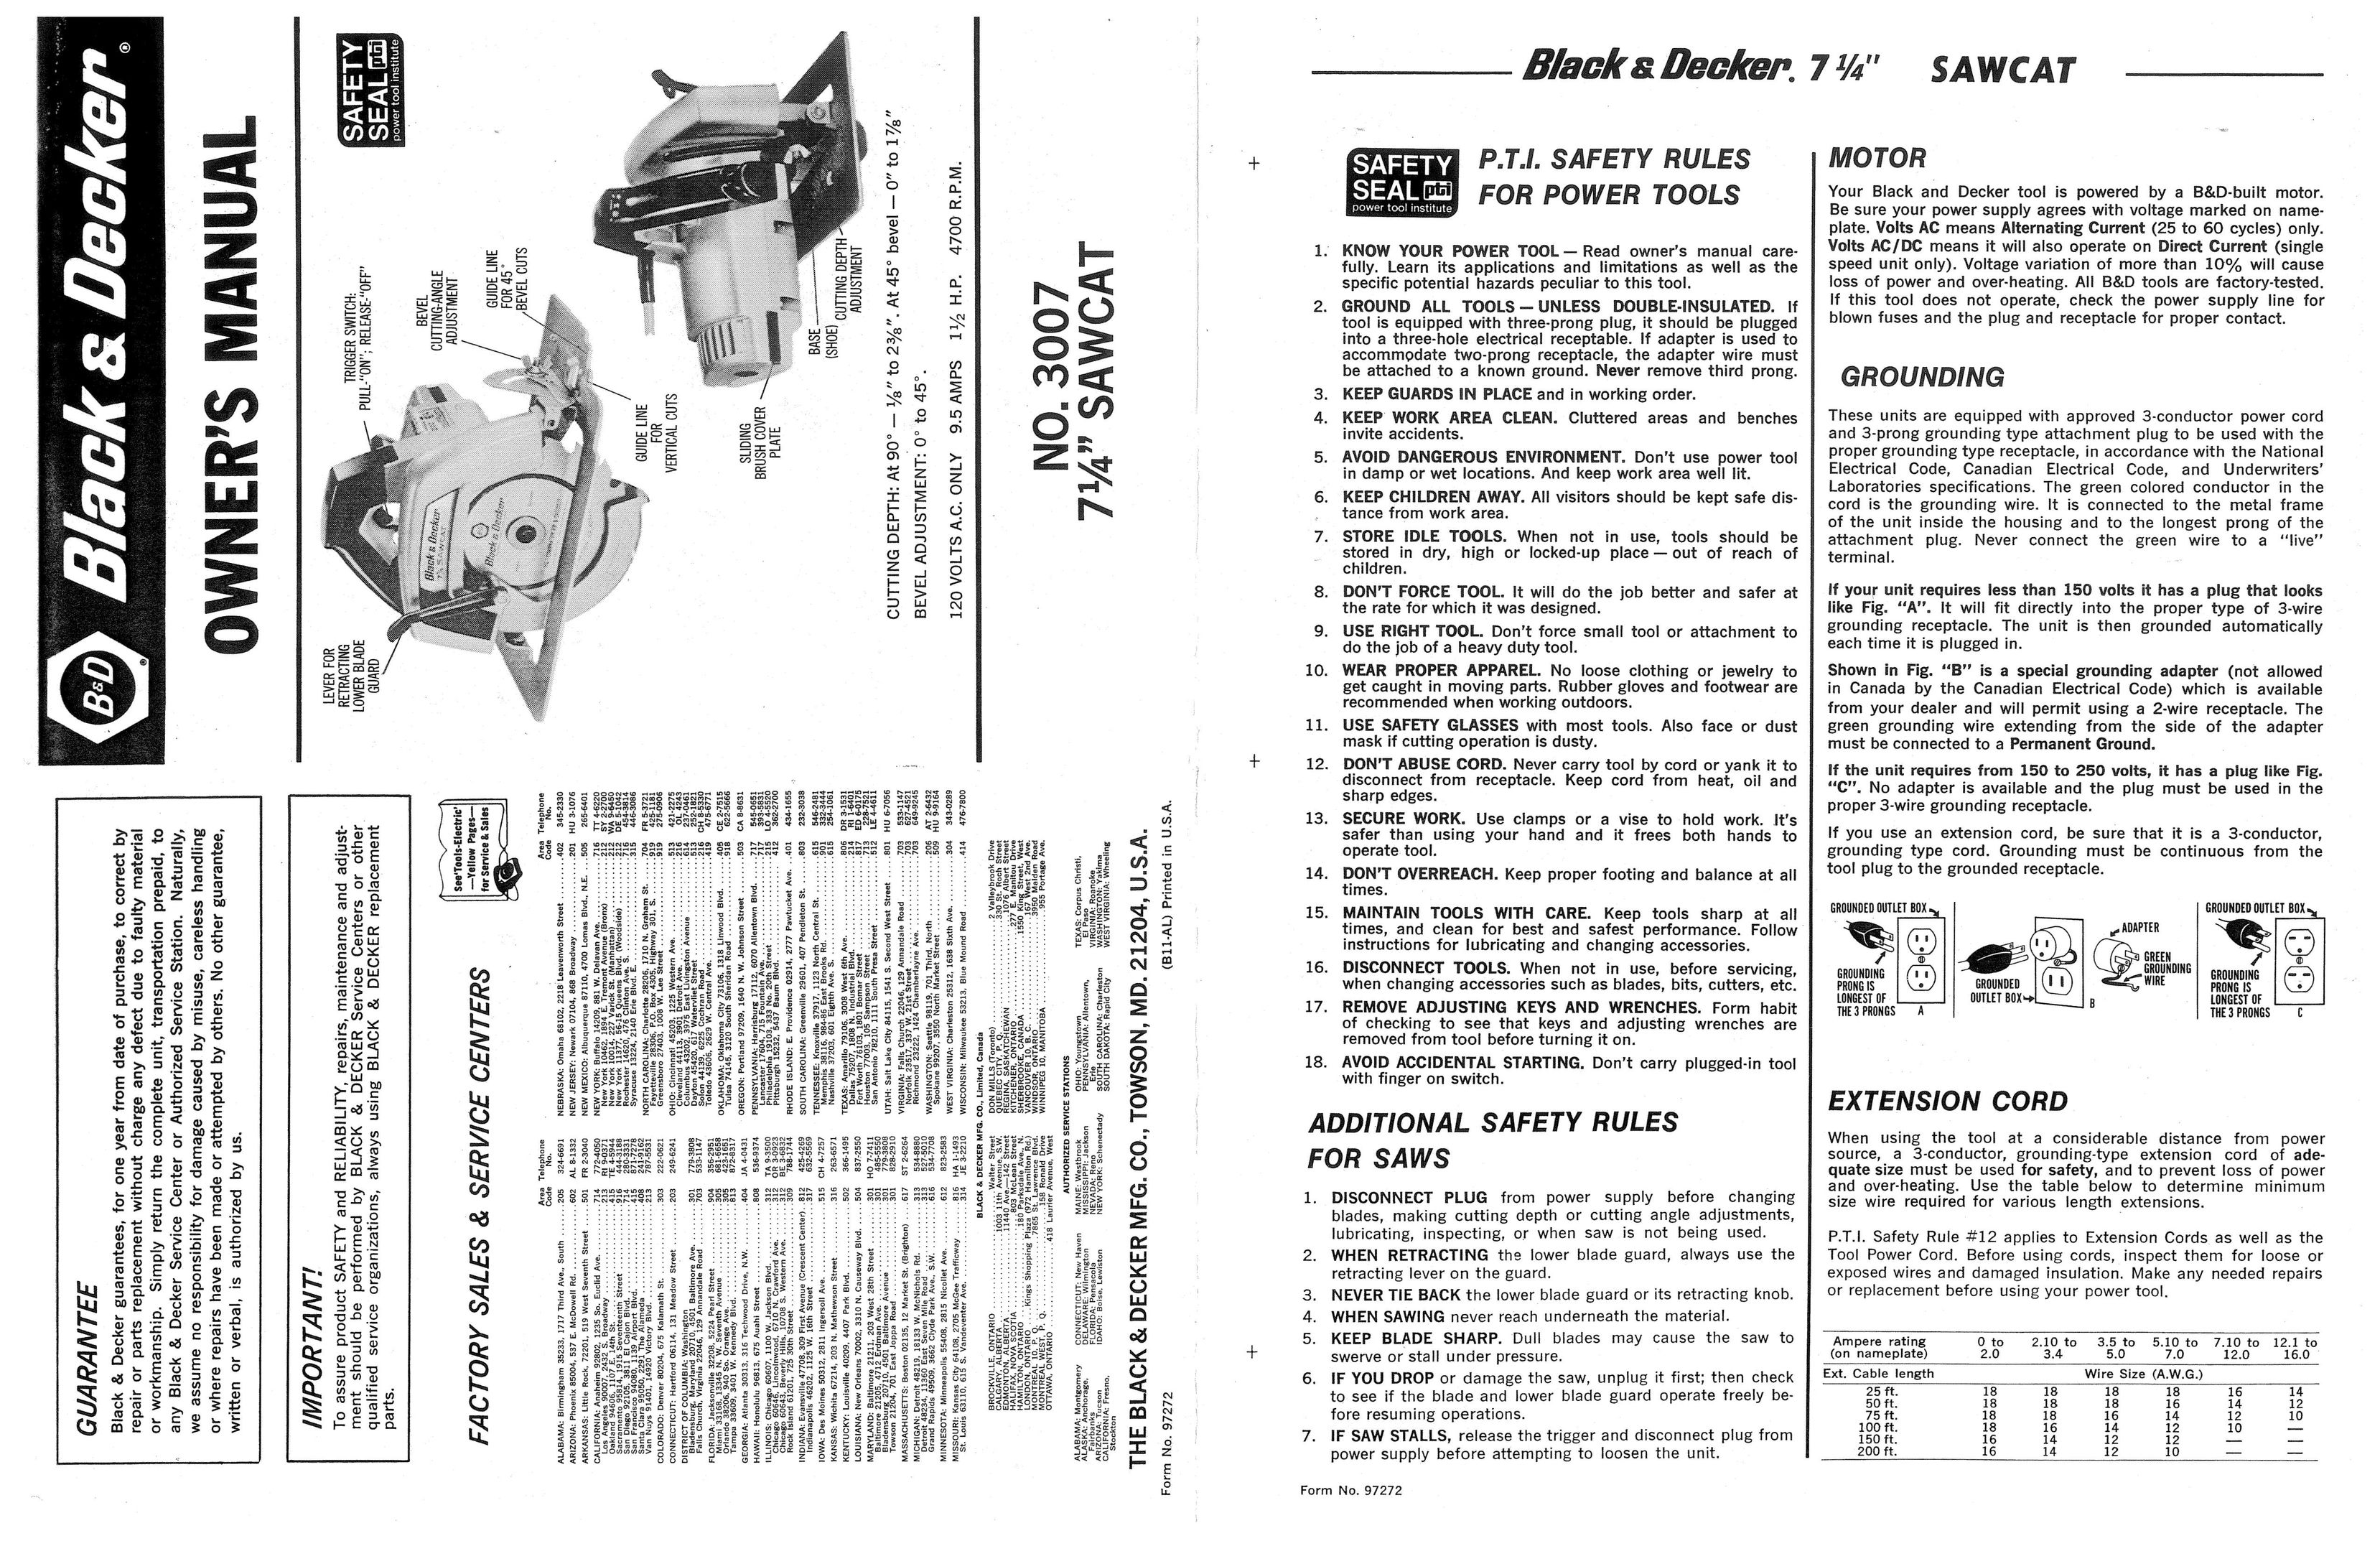 Black & Decker 3007 Saw User Manual